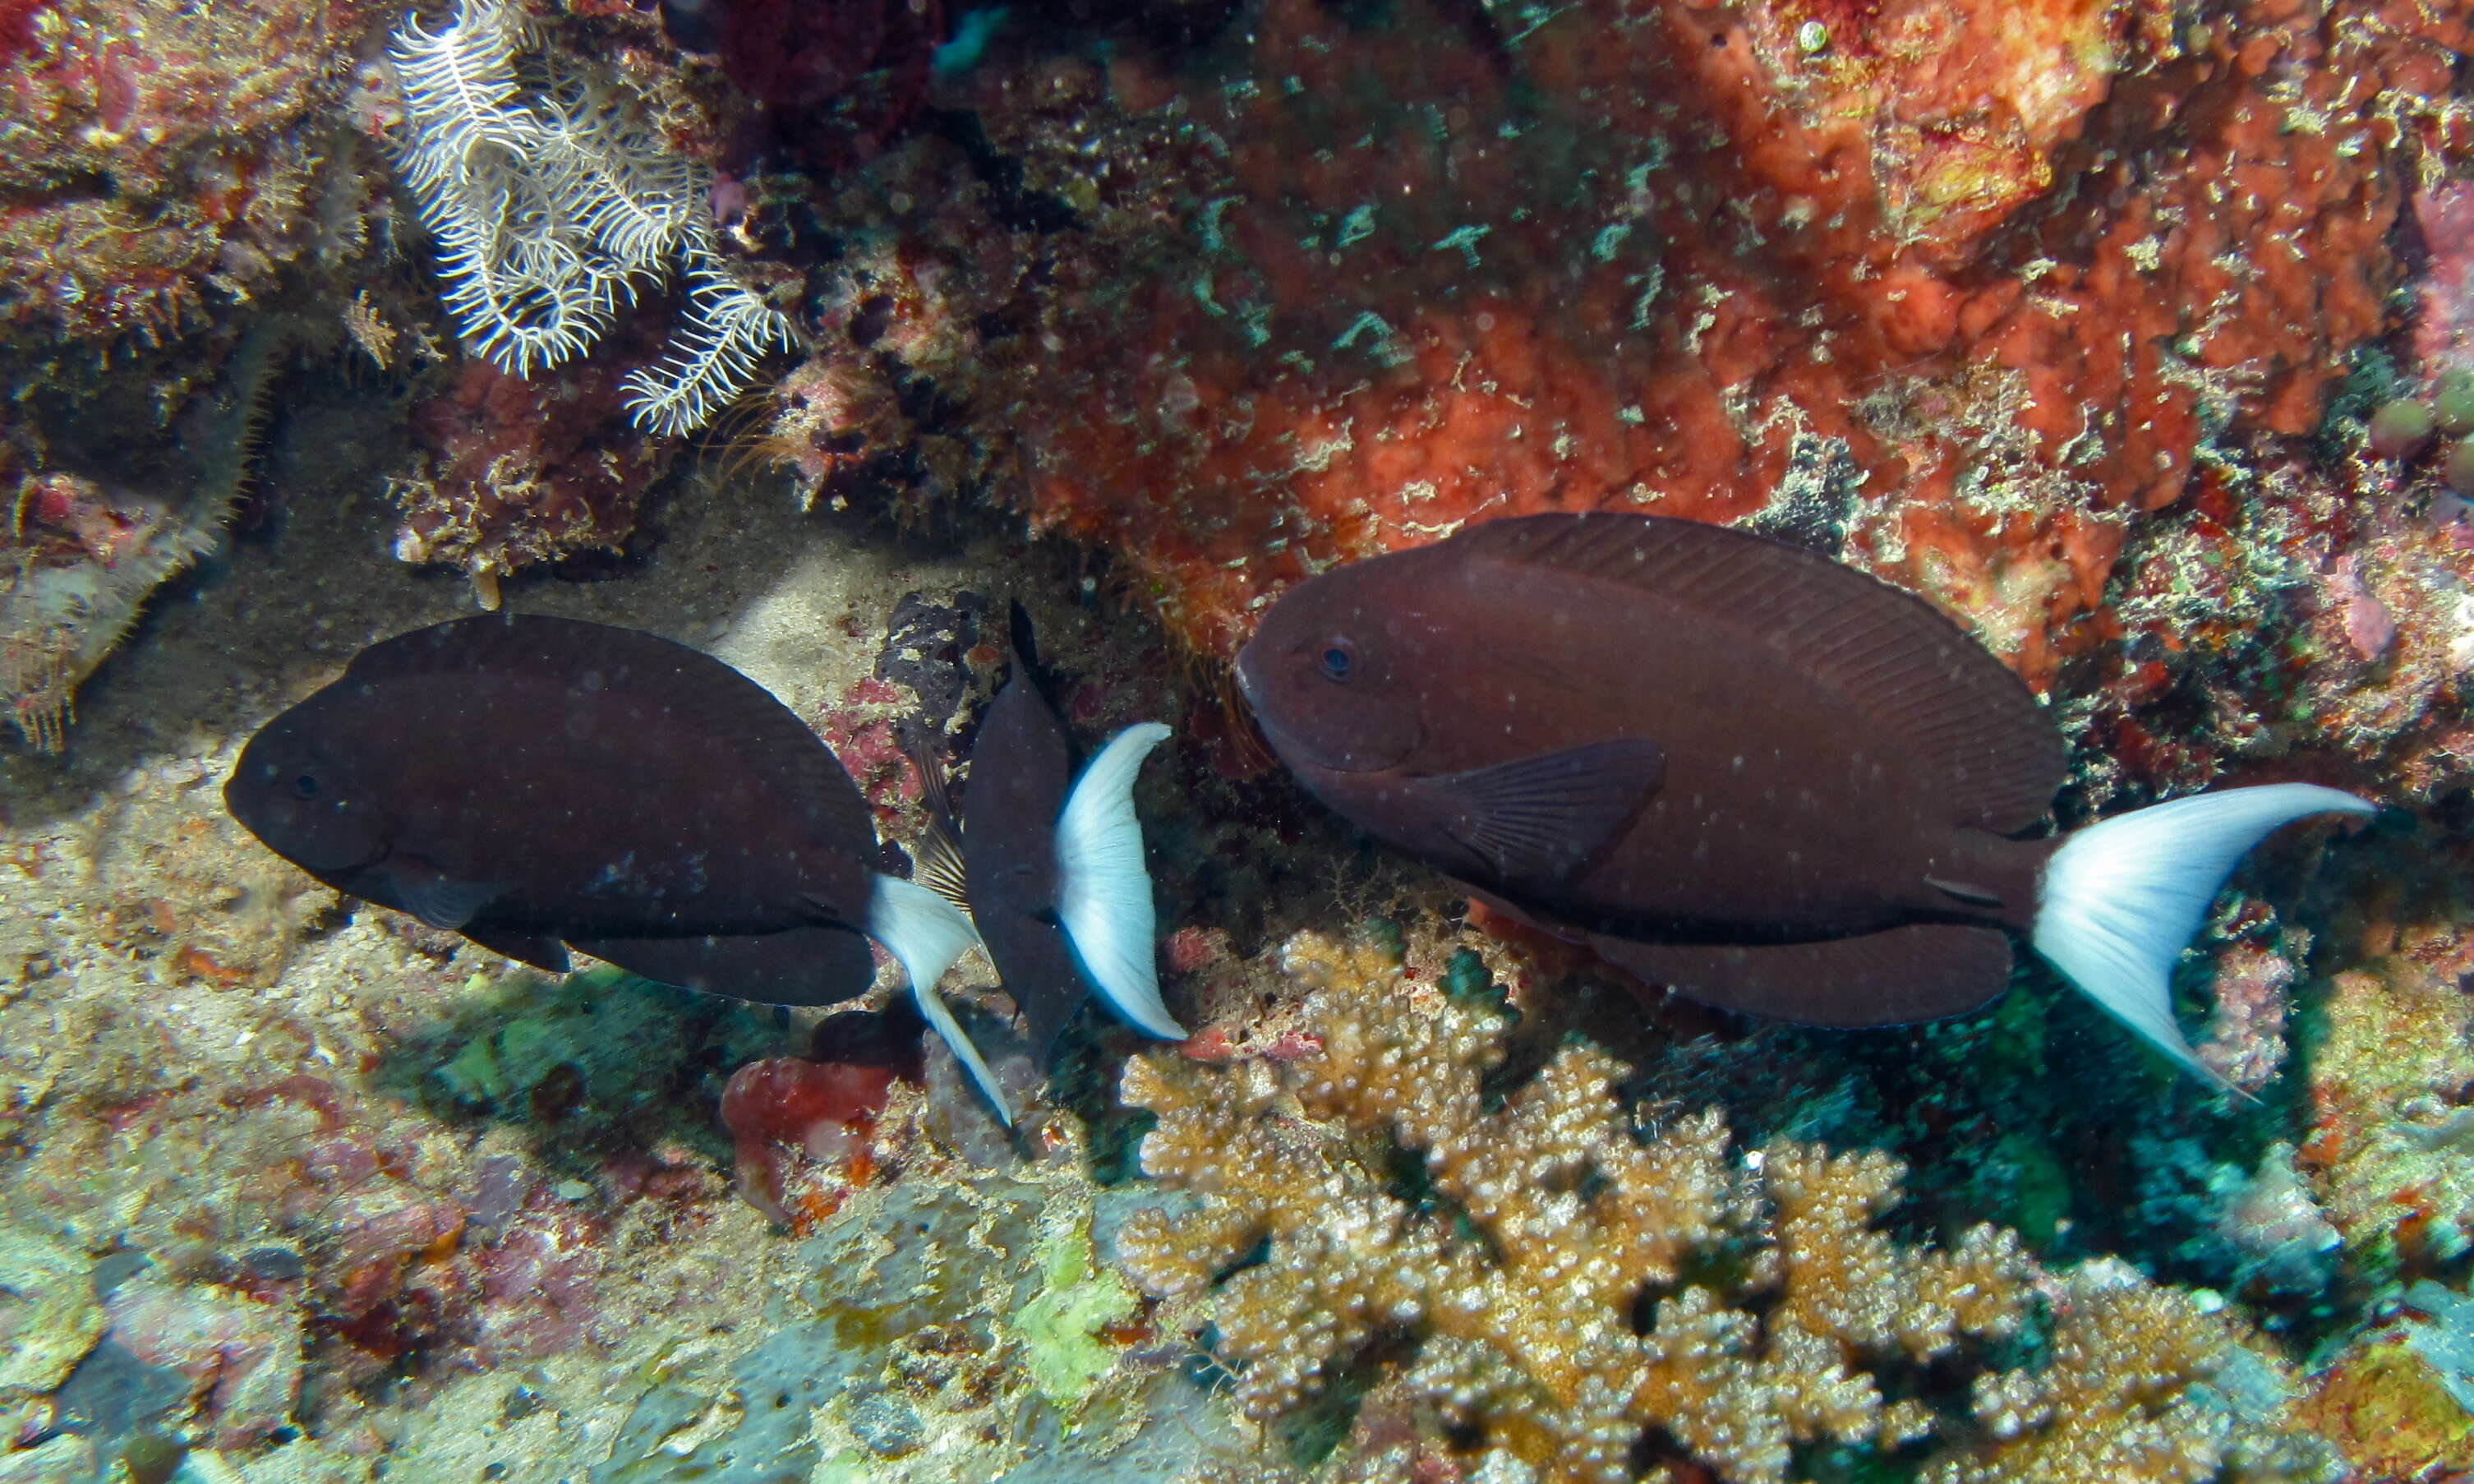 Image of Chocolate Surgeonfish